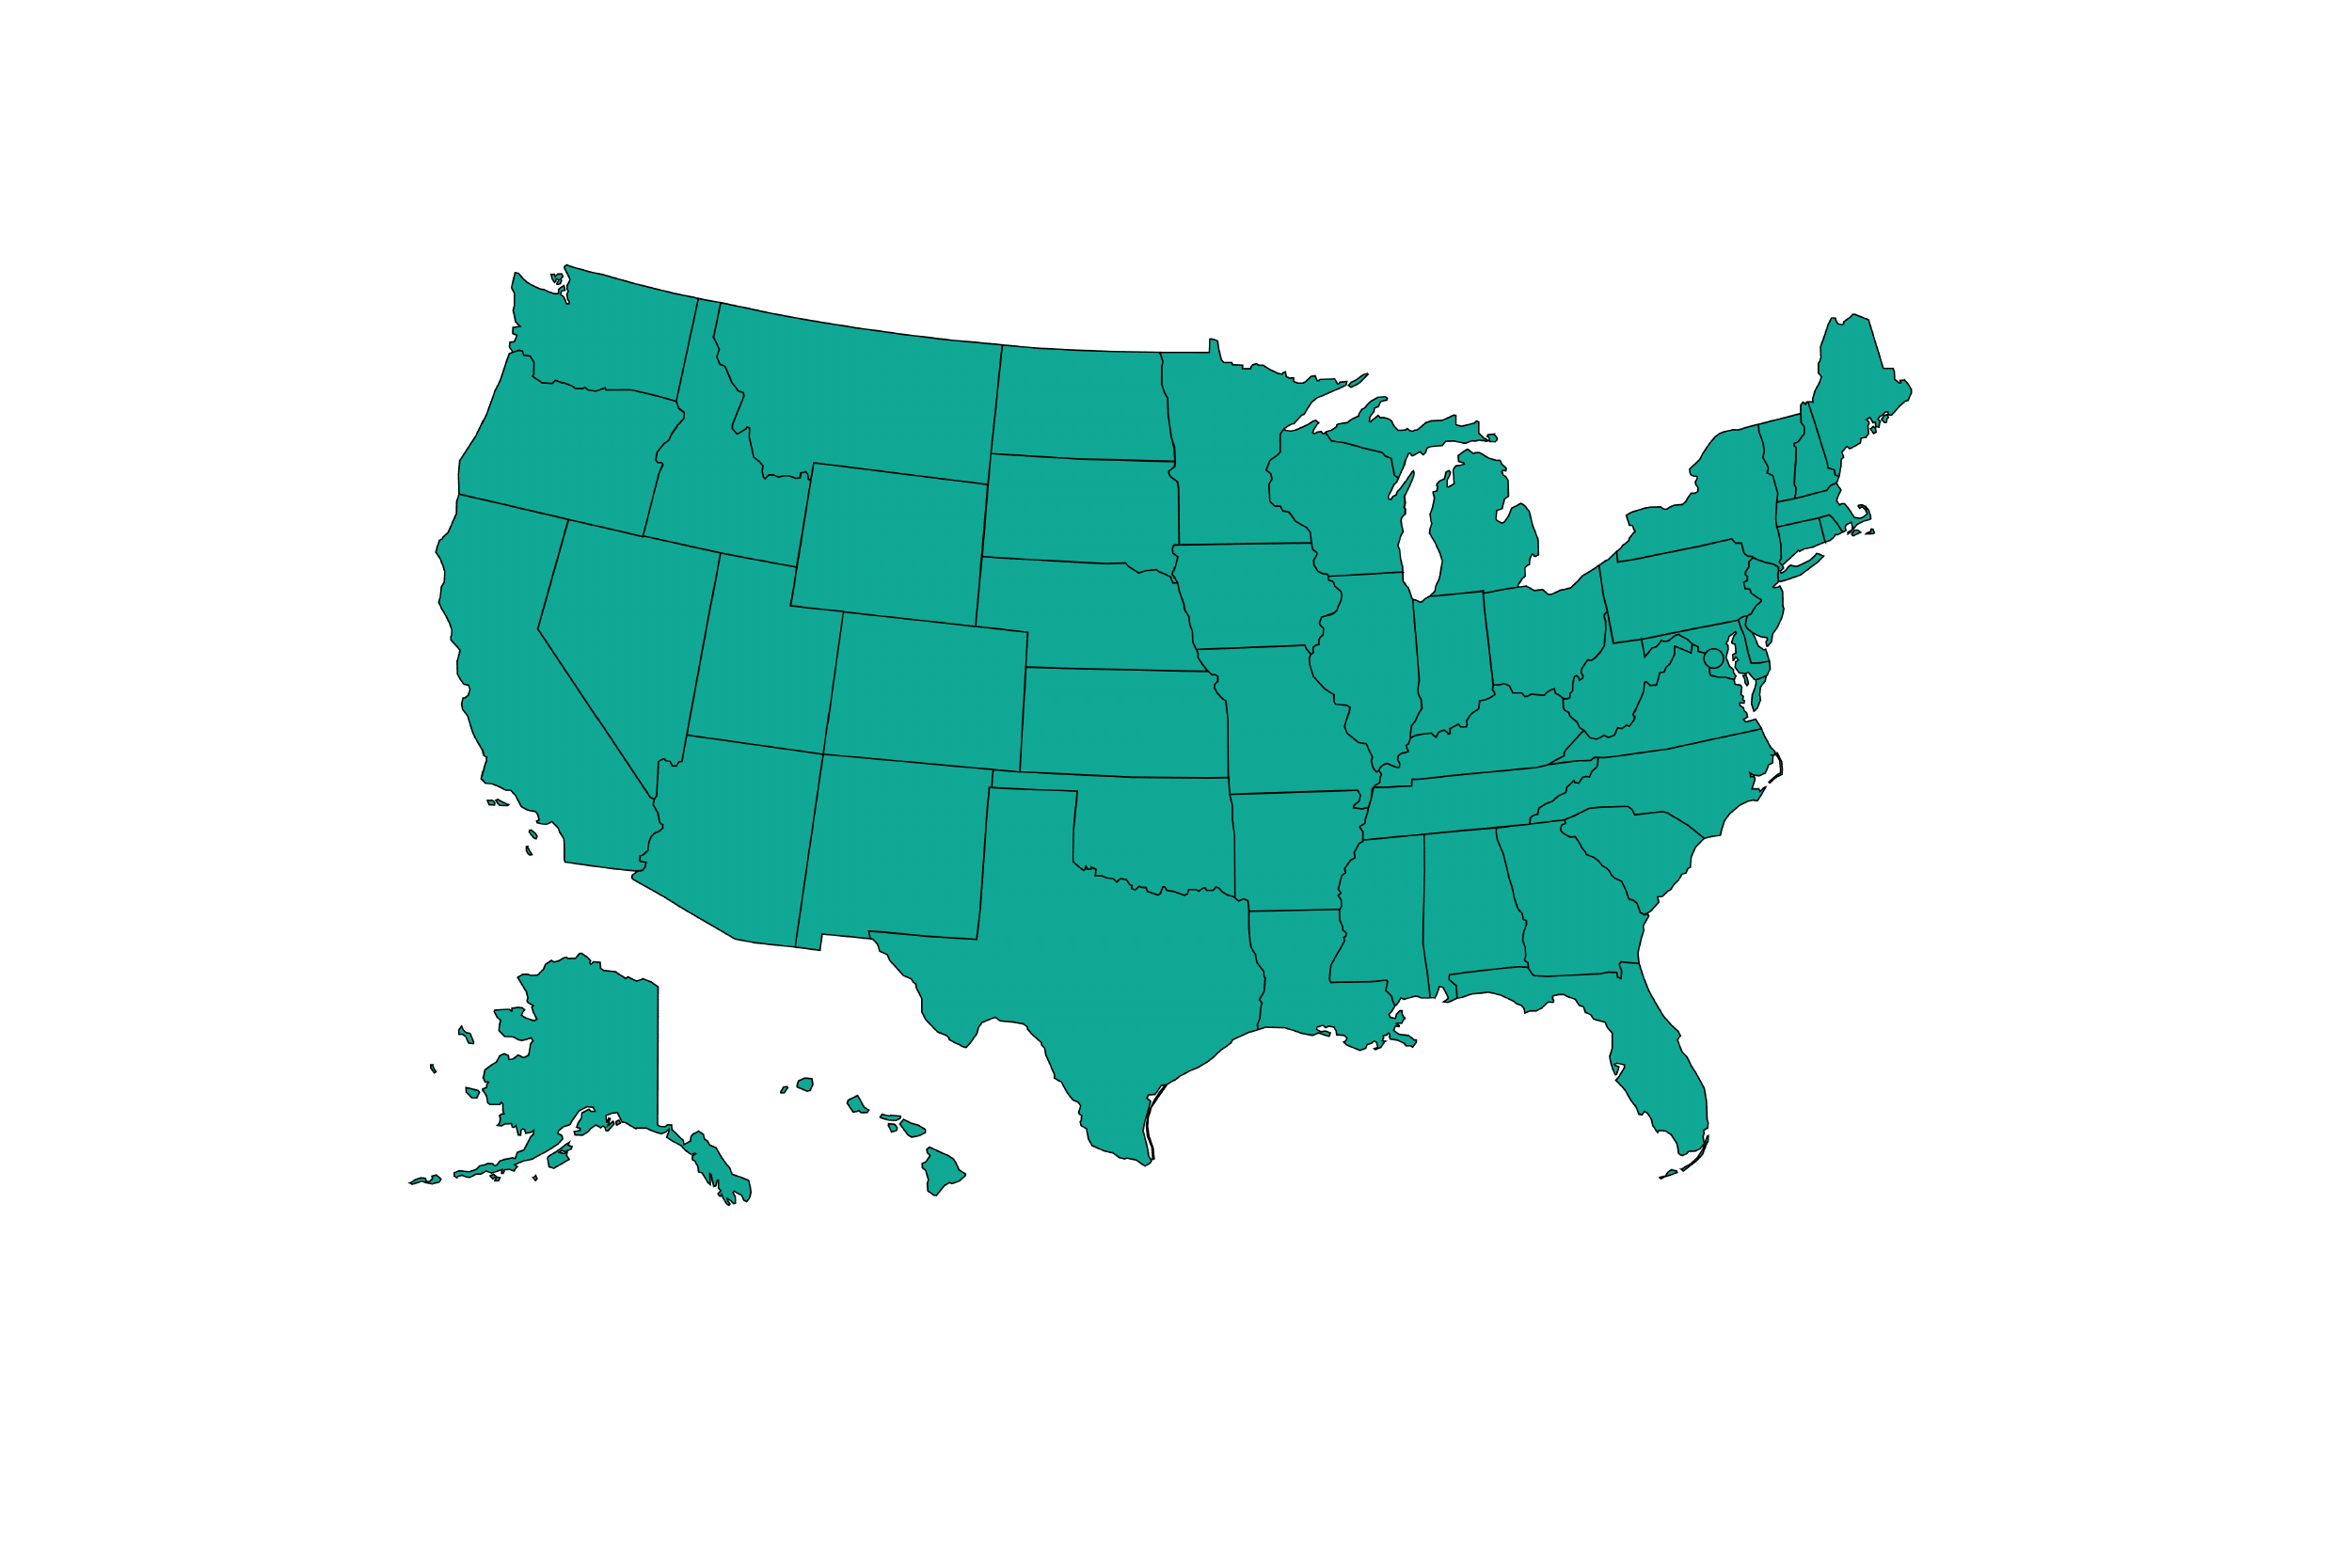 Rainhouse Service Areas in the USA